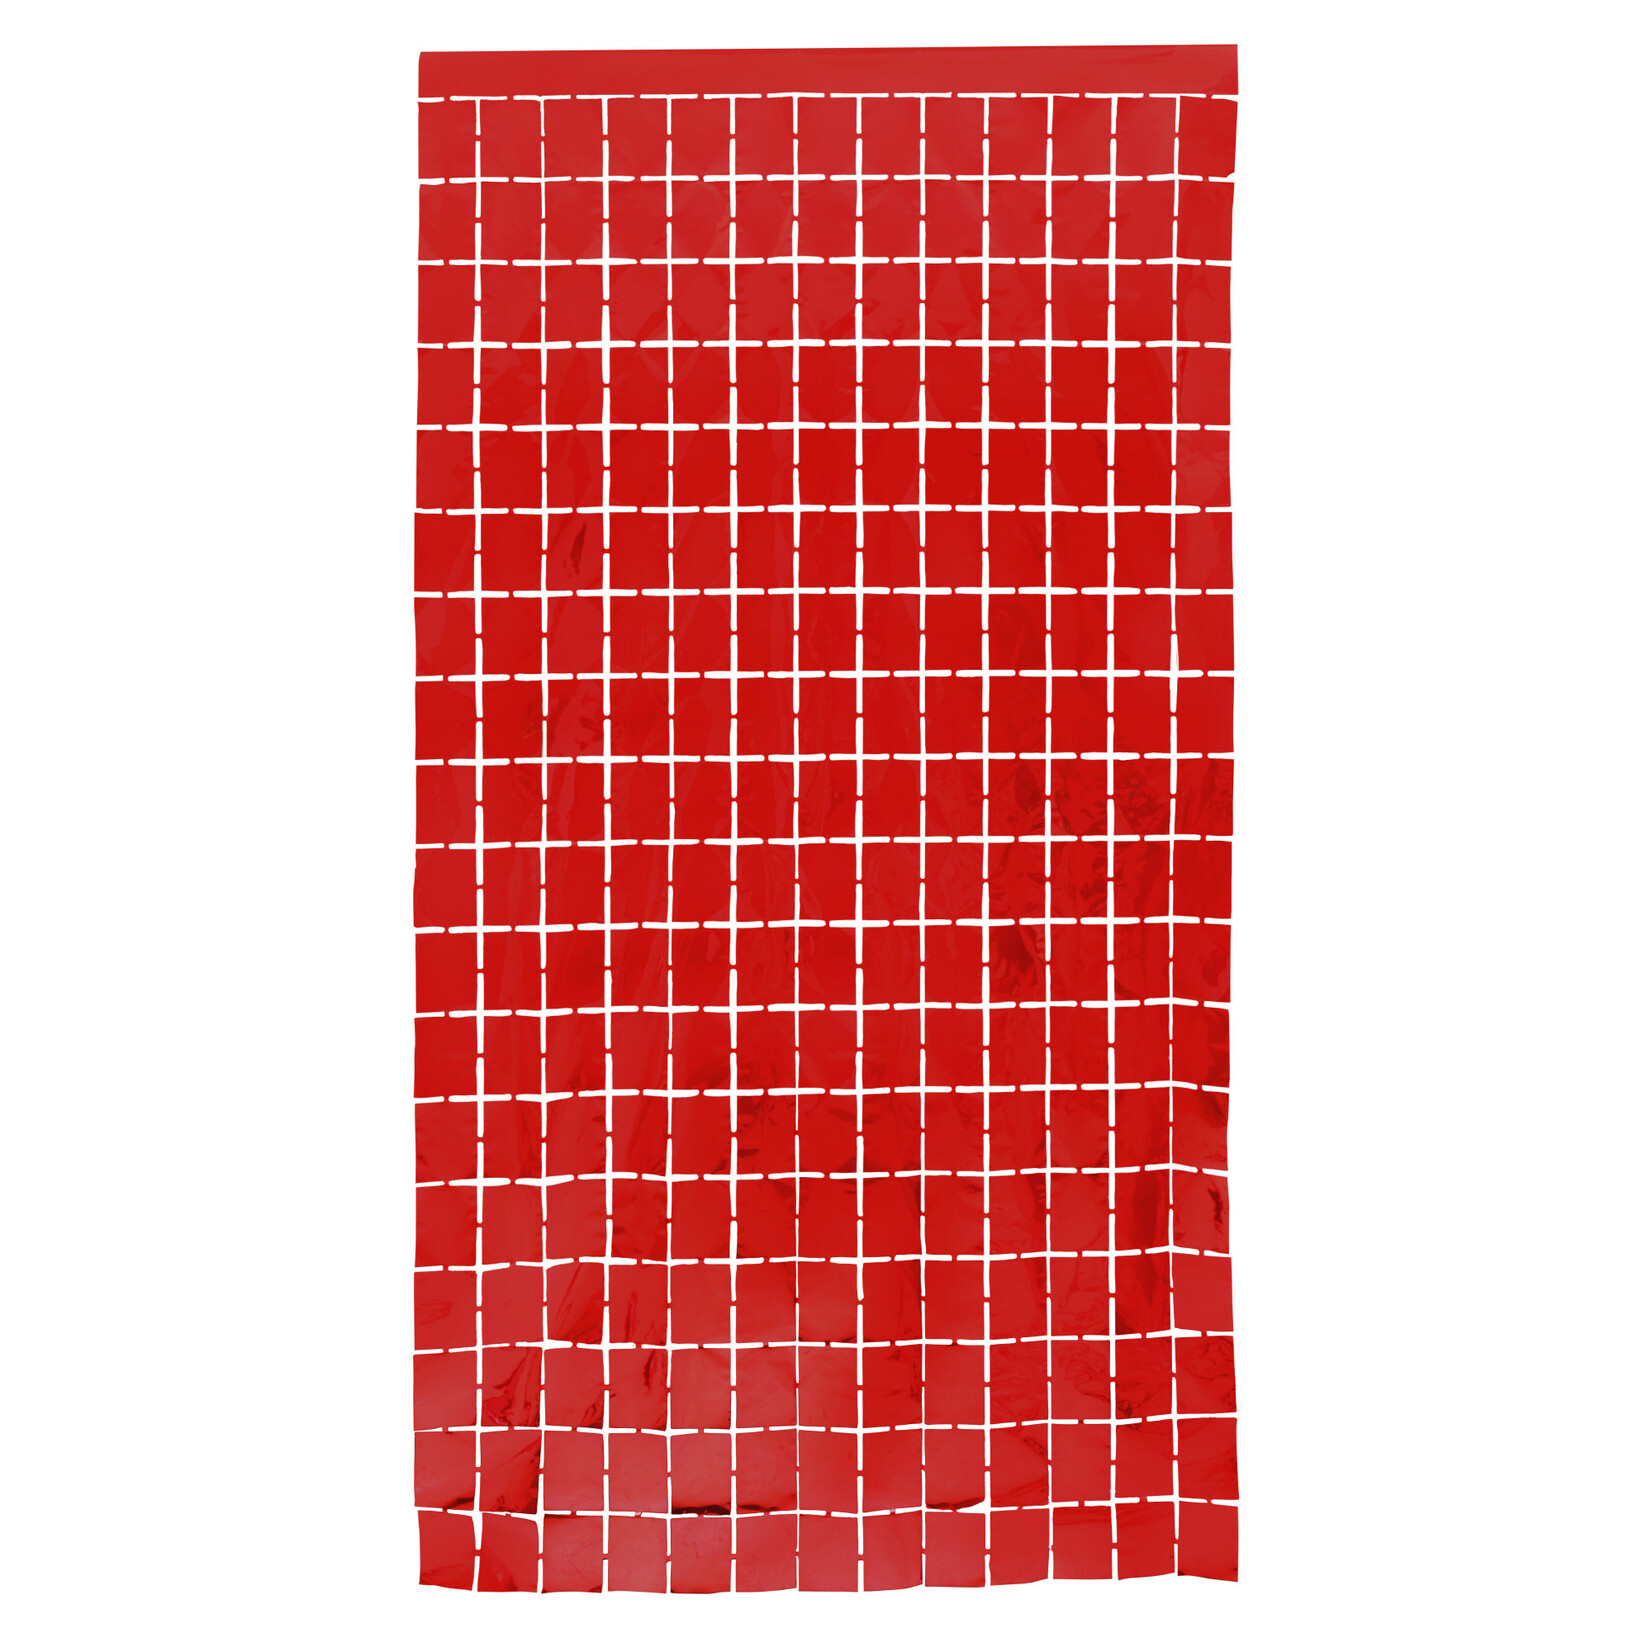 78” x 38" RED METALLIC SQUARE FOIL CURTAIN